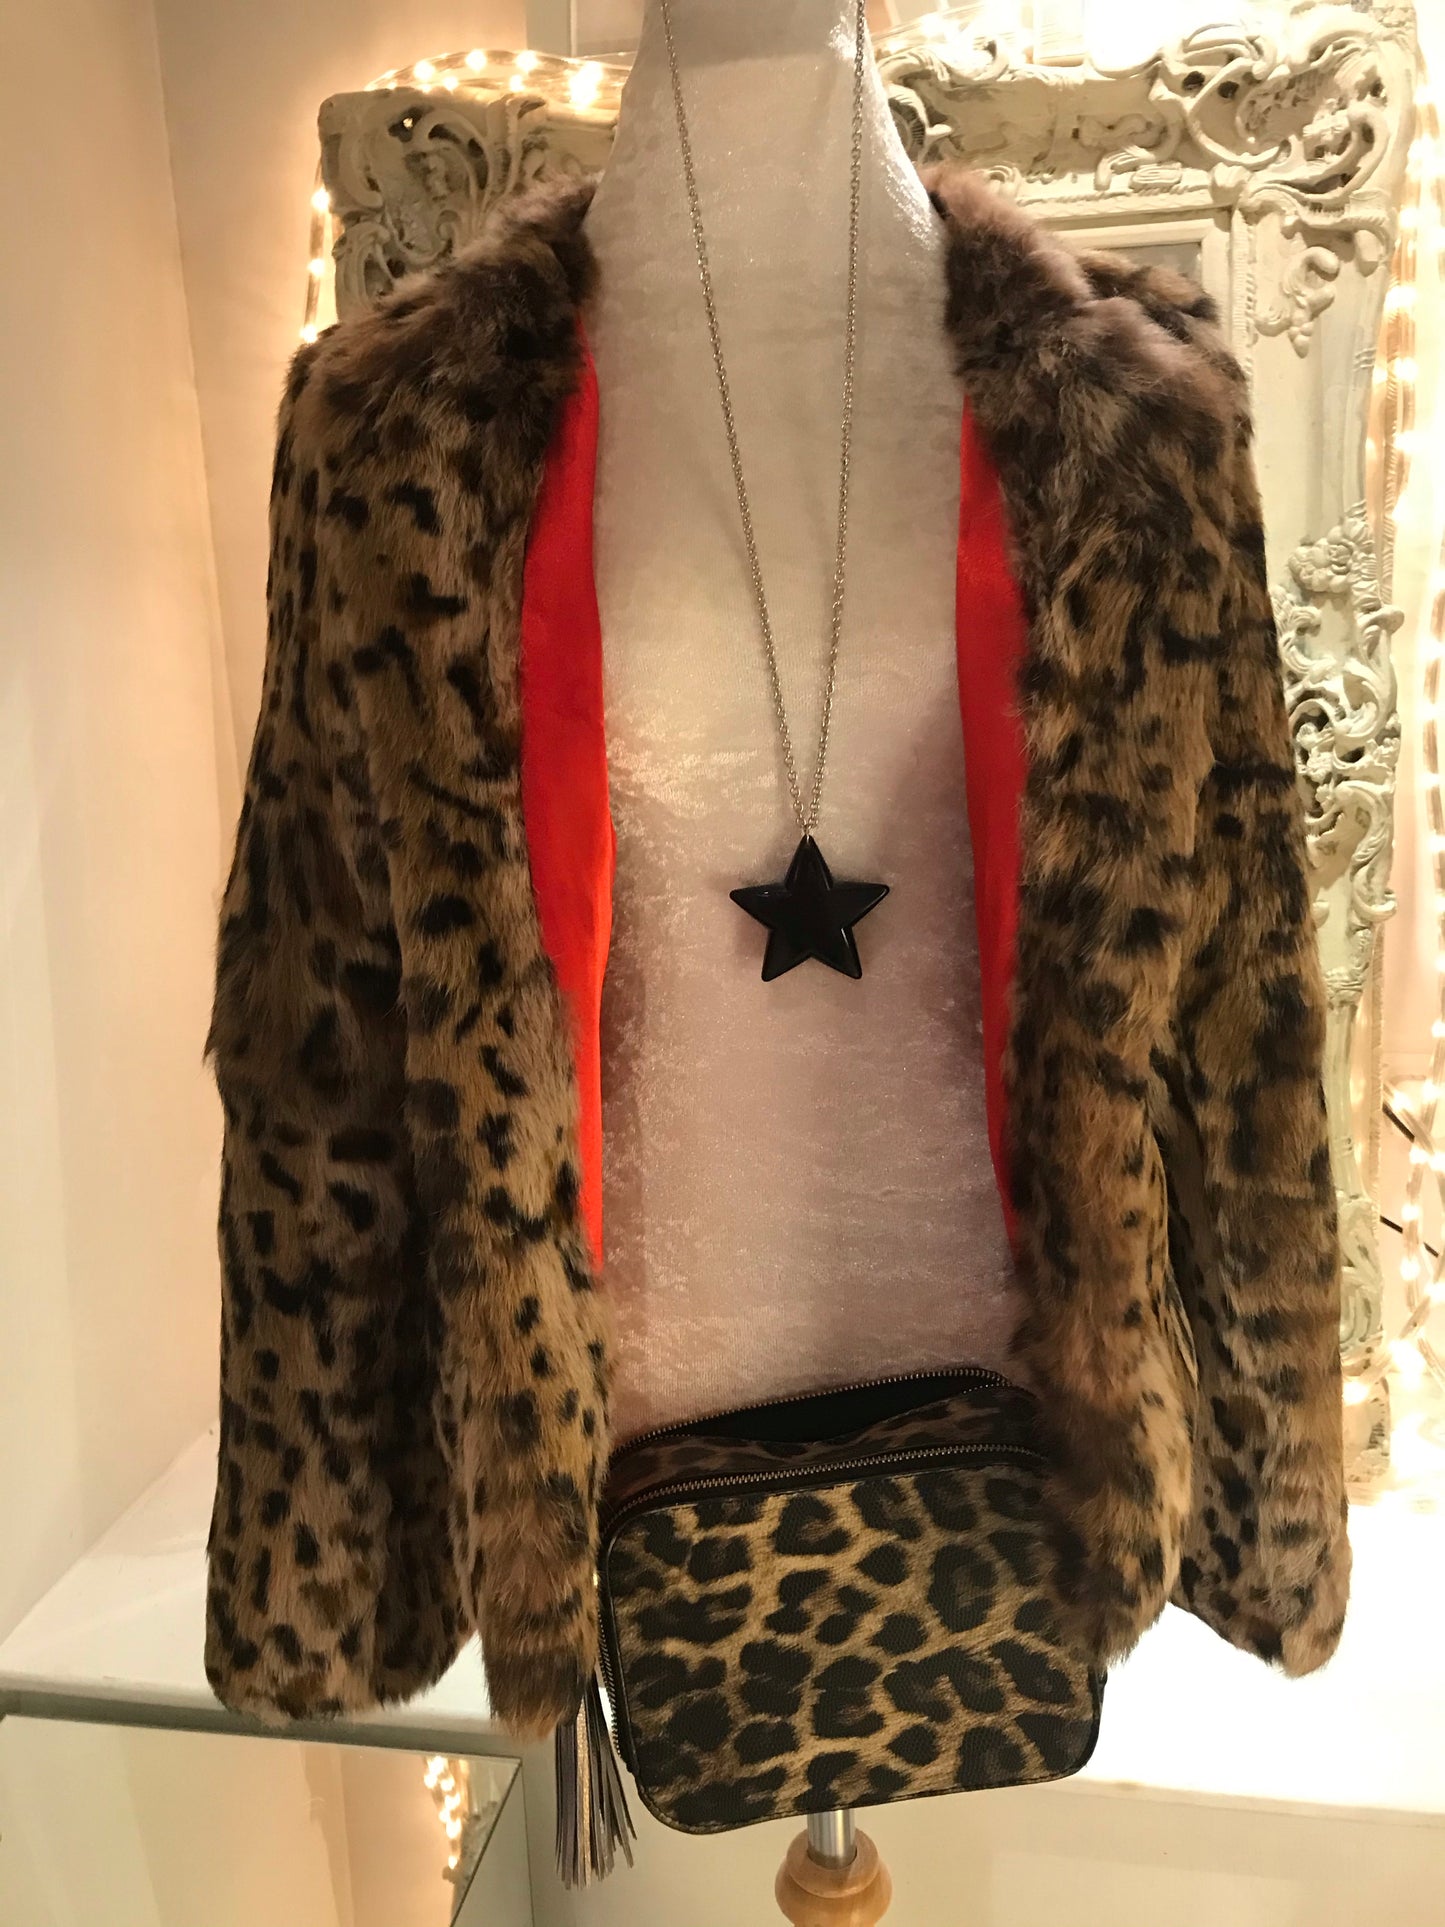 Rock Chic Glamour (Leopard) Coat